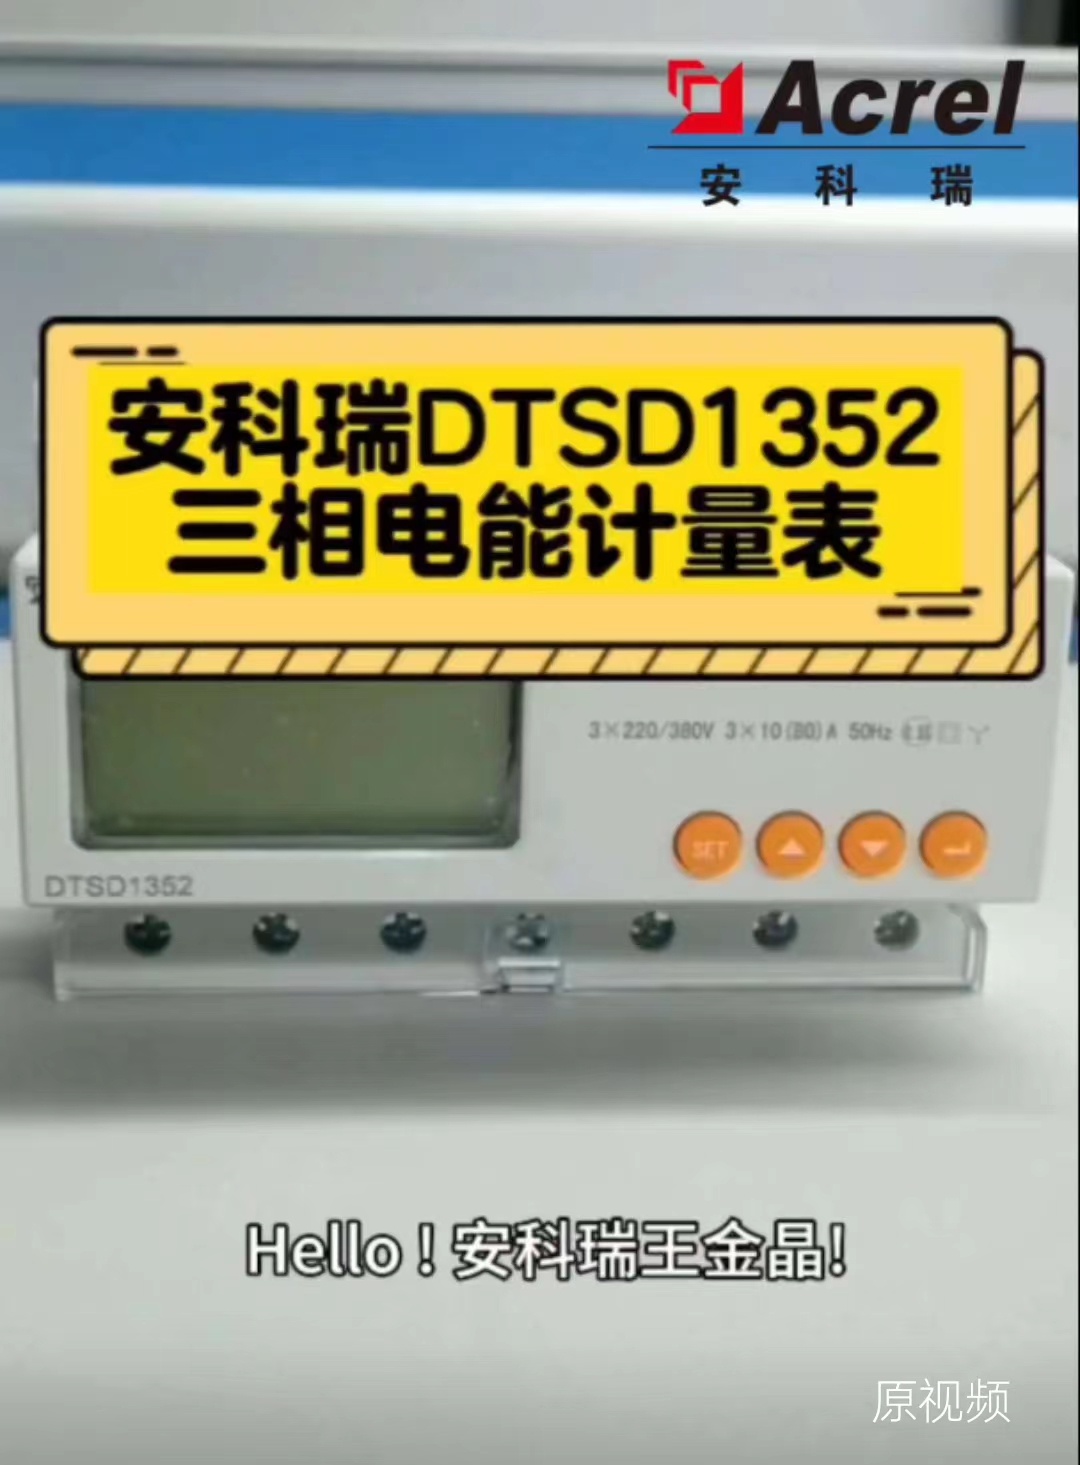 DTSD1352三相导轨式电能计量表，直接接入或经互感器接入，具有2-31次谐波分析和RS485接口